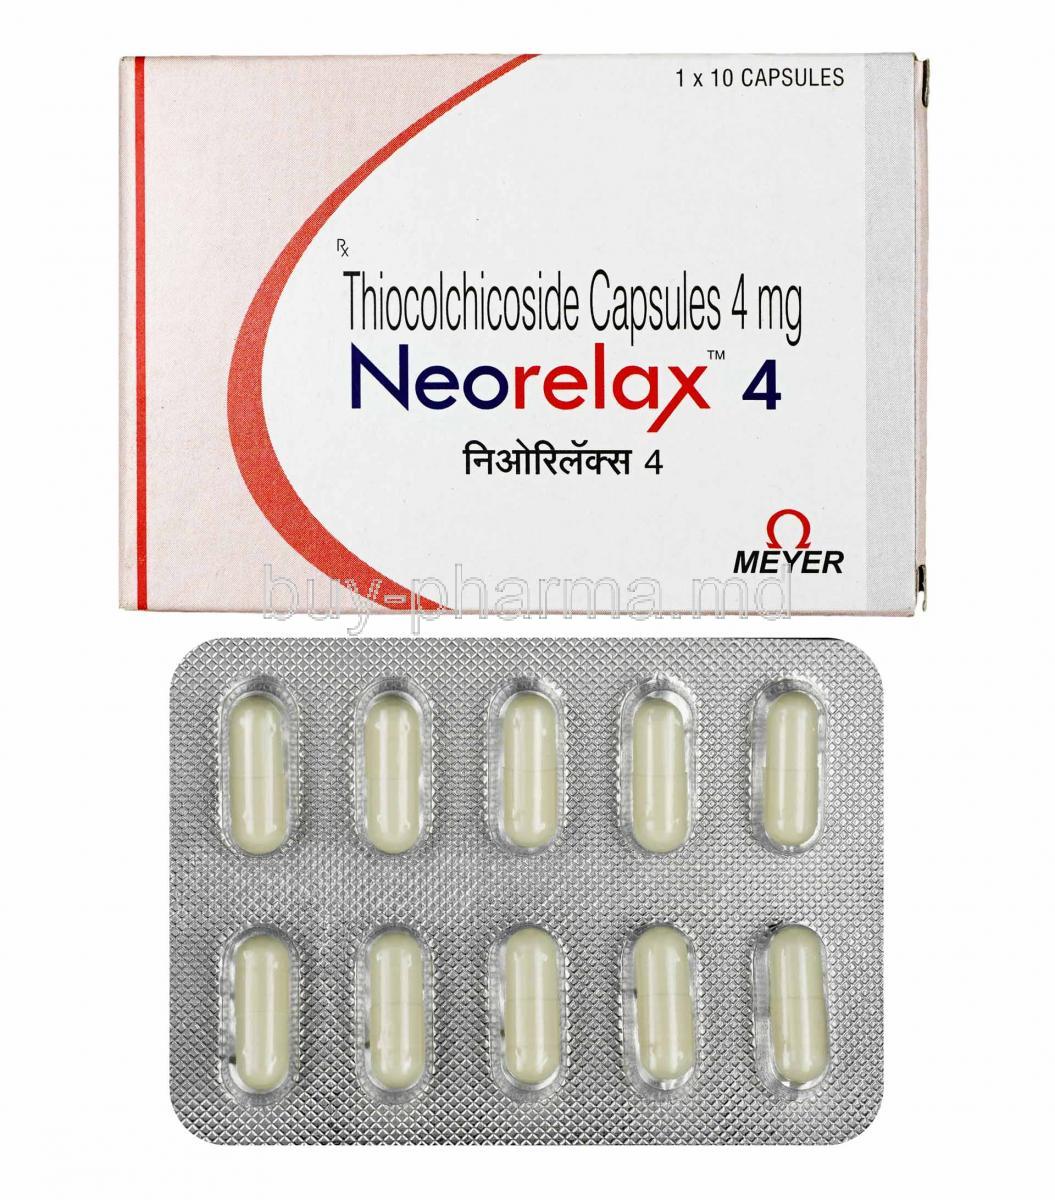 Neorelax, Thiocolchicoside 4mg box and capsules